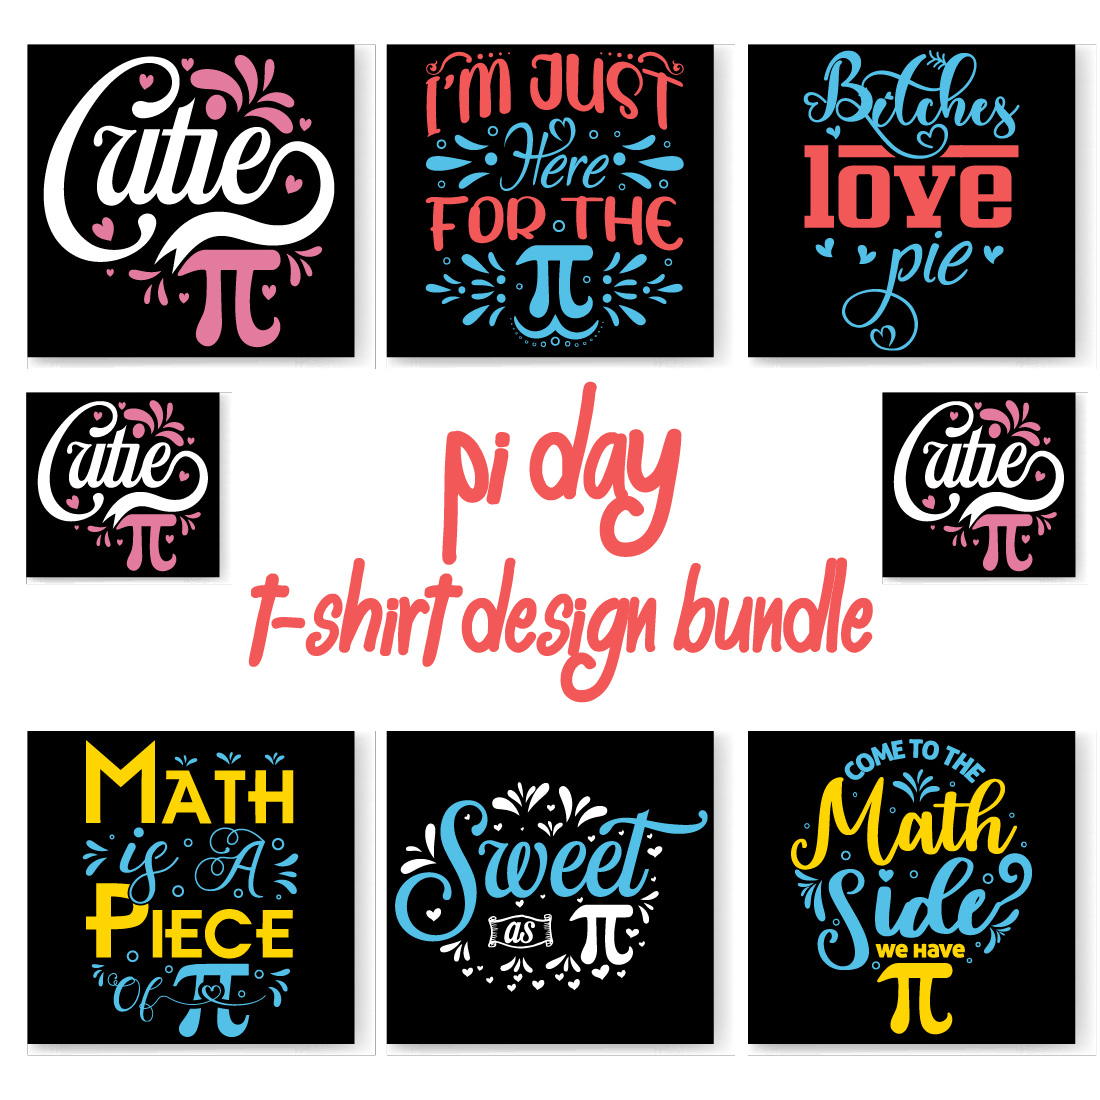 Pi day T-shirt design bundle, pi day, pi day design cover image.